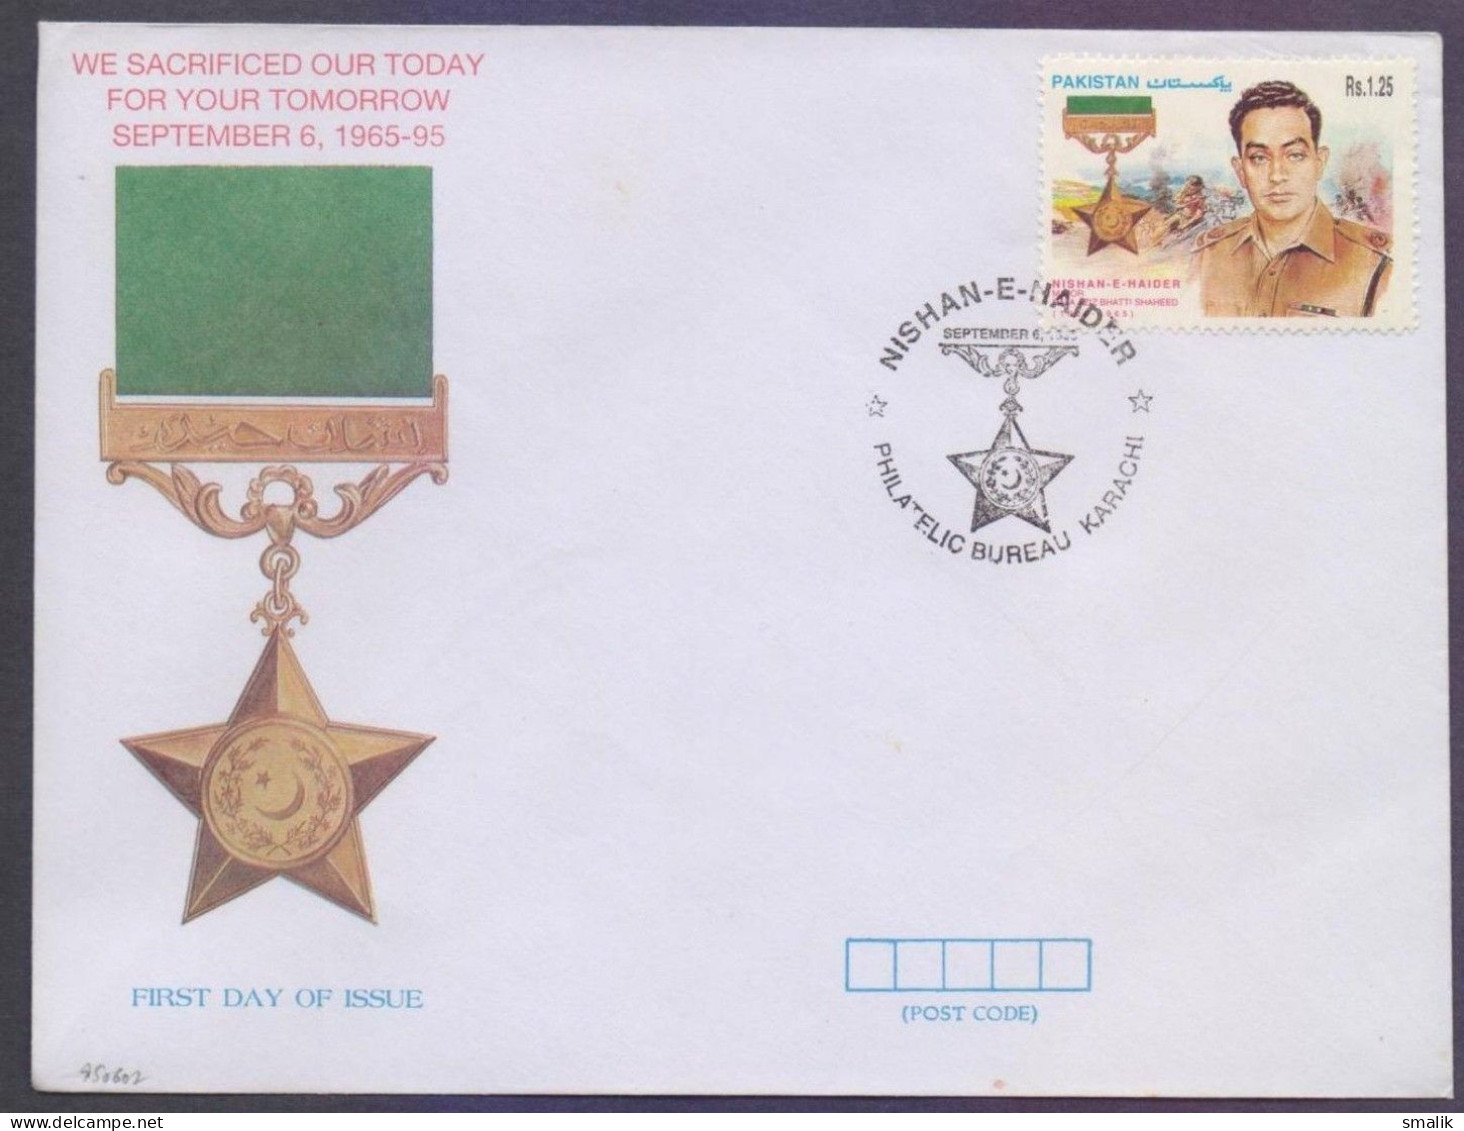 PAKISTAN 1995 FDC - Nishan-e-Haider, Major Raja Aziz Bhatti Shaheed, ARMY Medals, First Day Cover - Pakistan